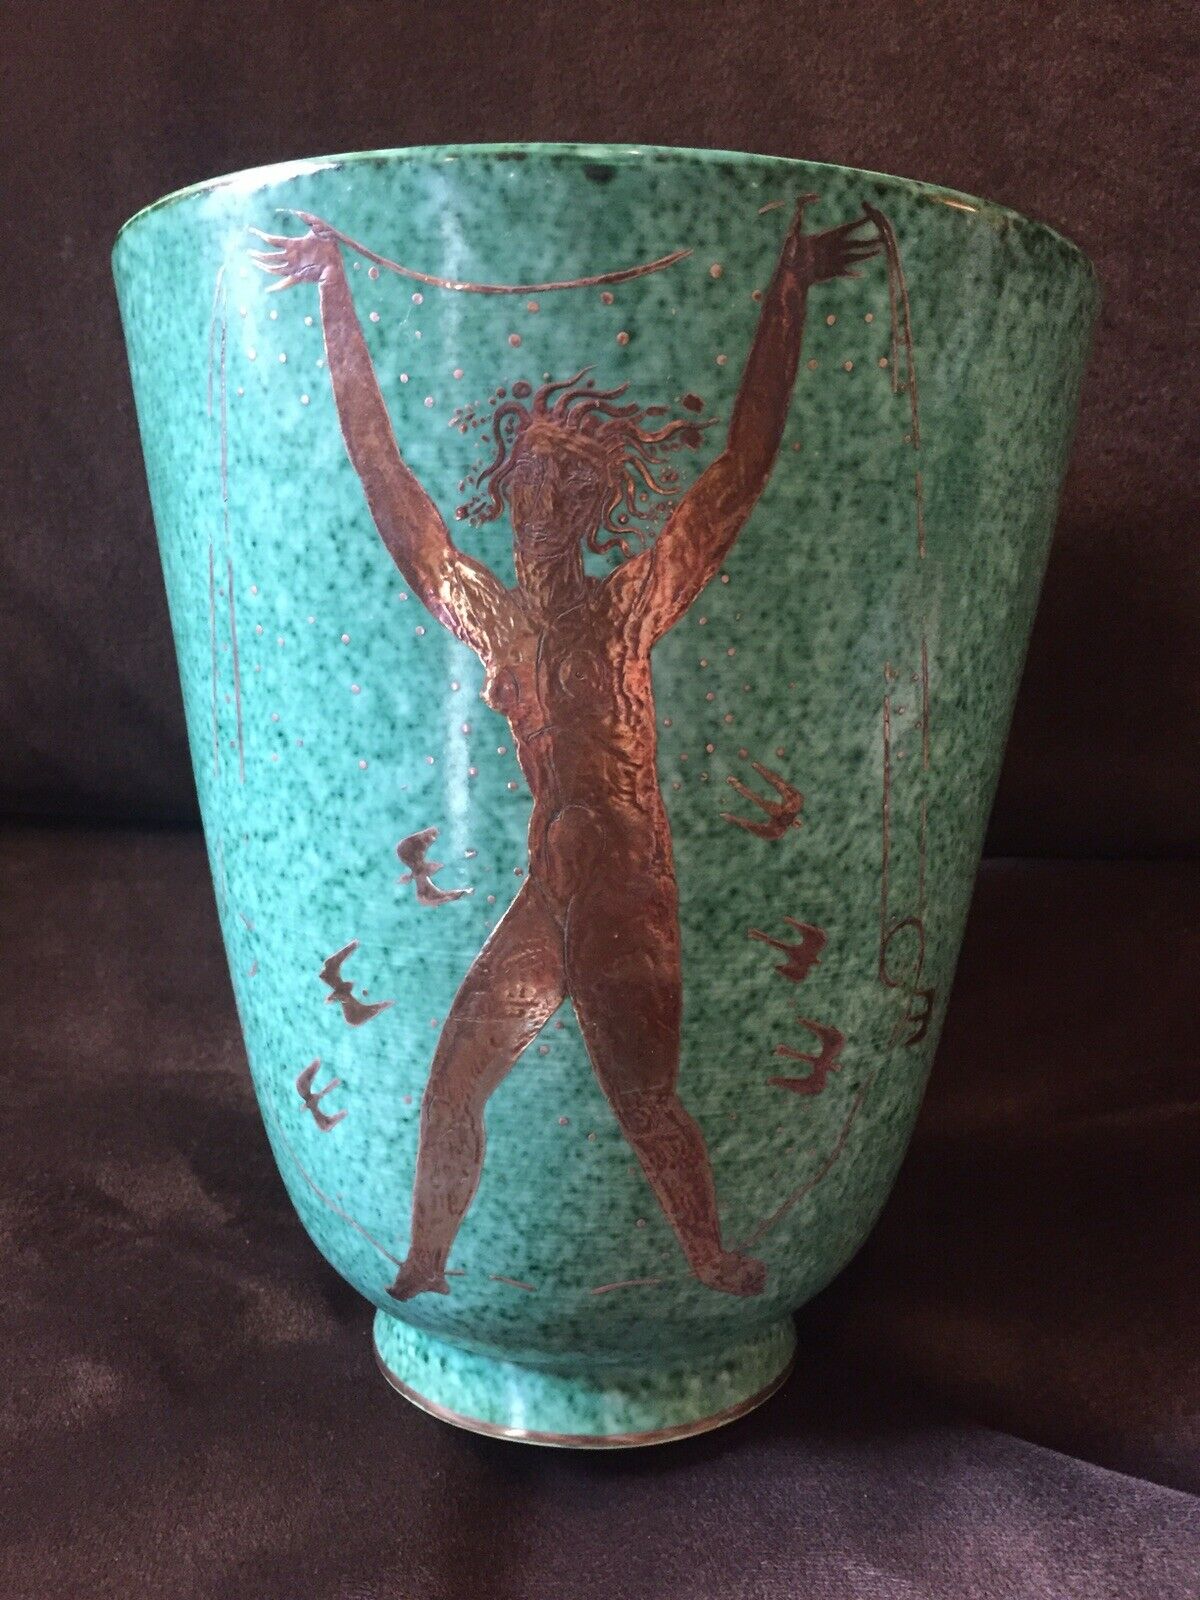 Gustavsberg Sweden Argenta Wilhelm Kage Pottery Vase Mythical Nude Figure Design